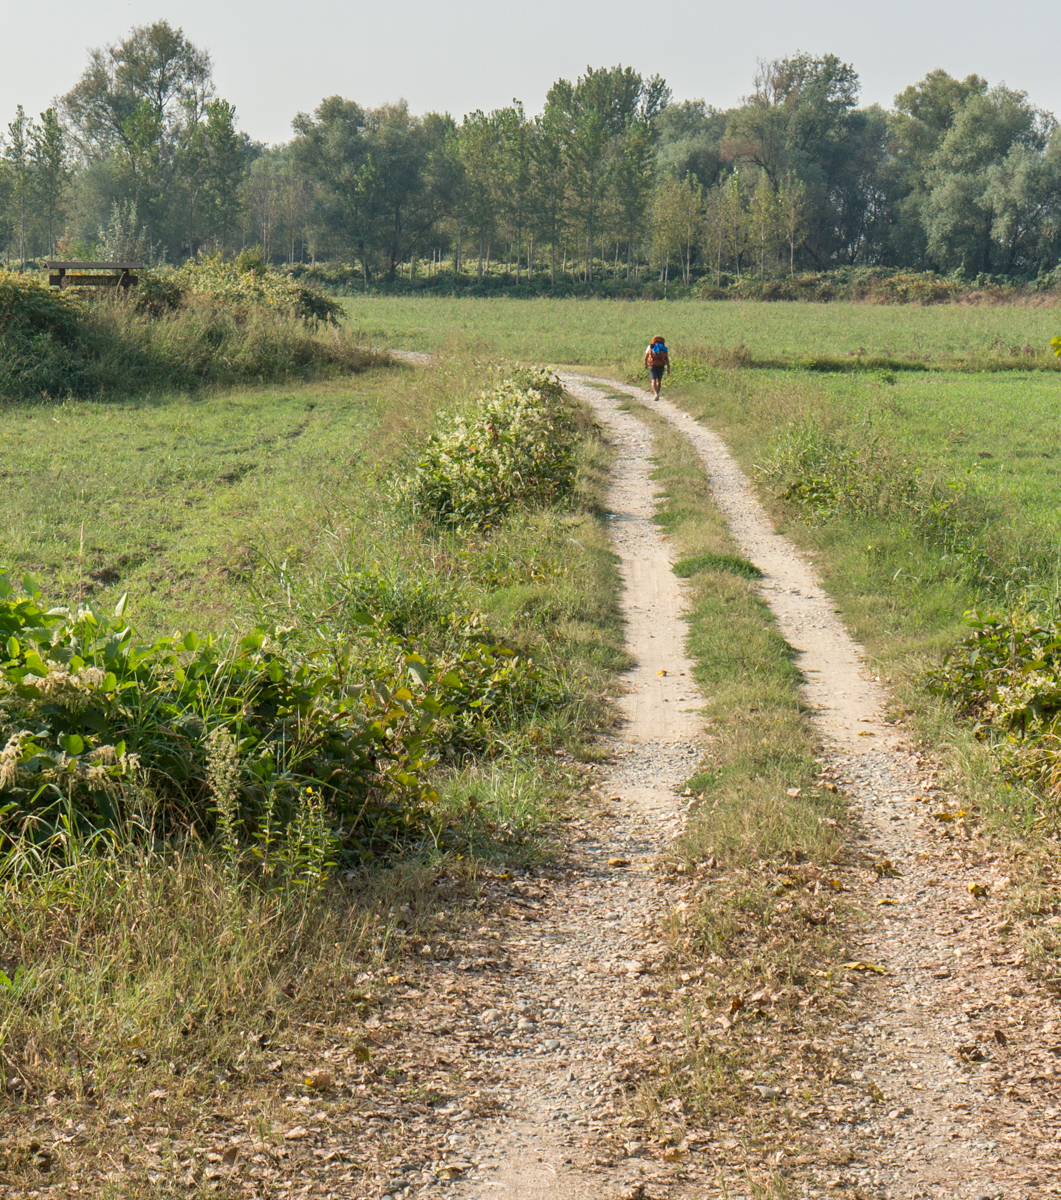 A pilgrim on the Via Francigena as it passes through farmland in Italy | Photo by Mike Hudak